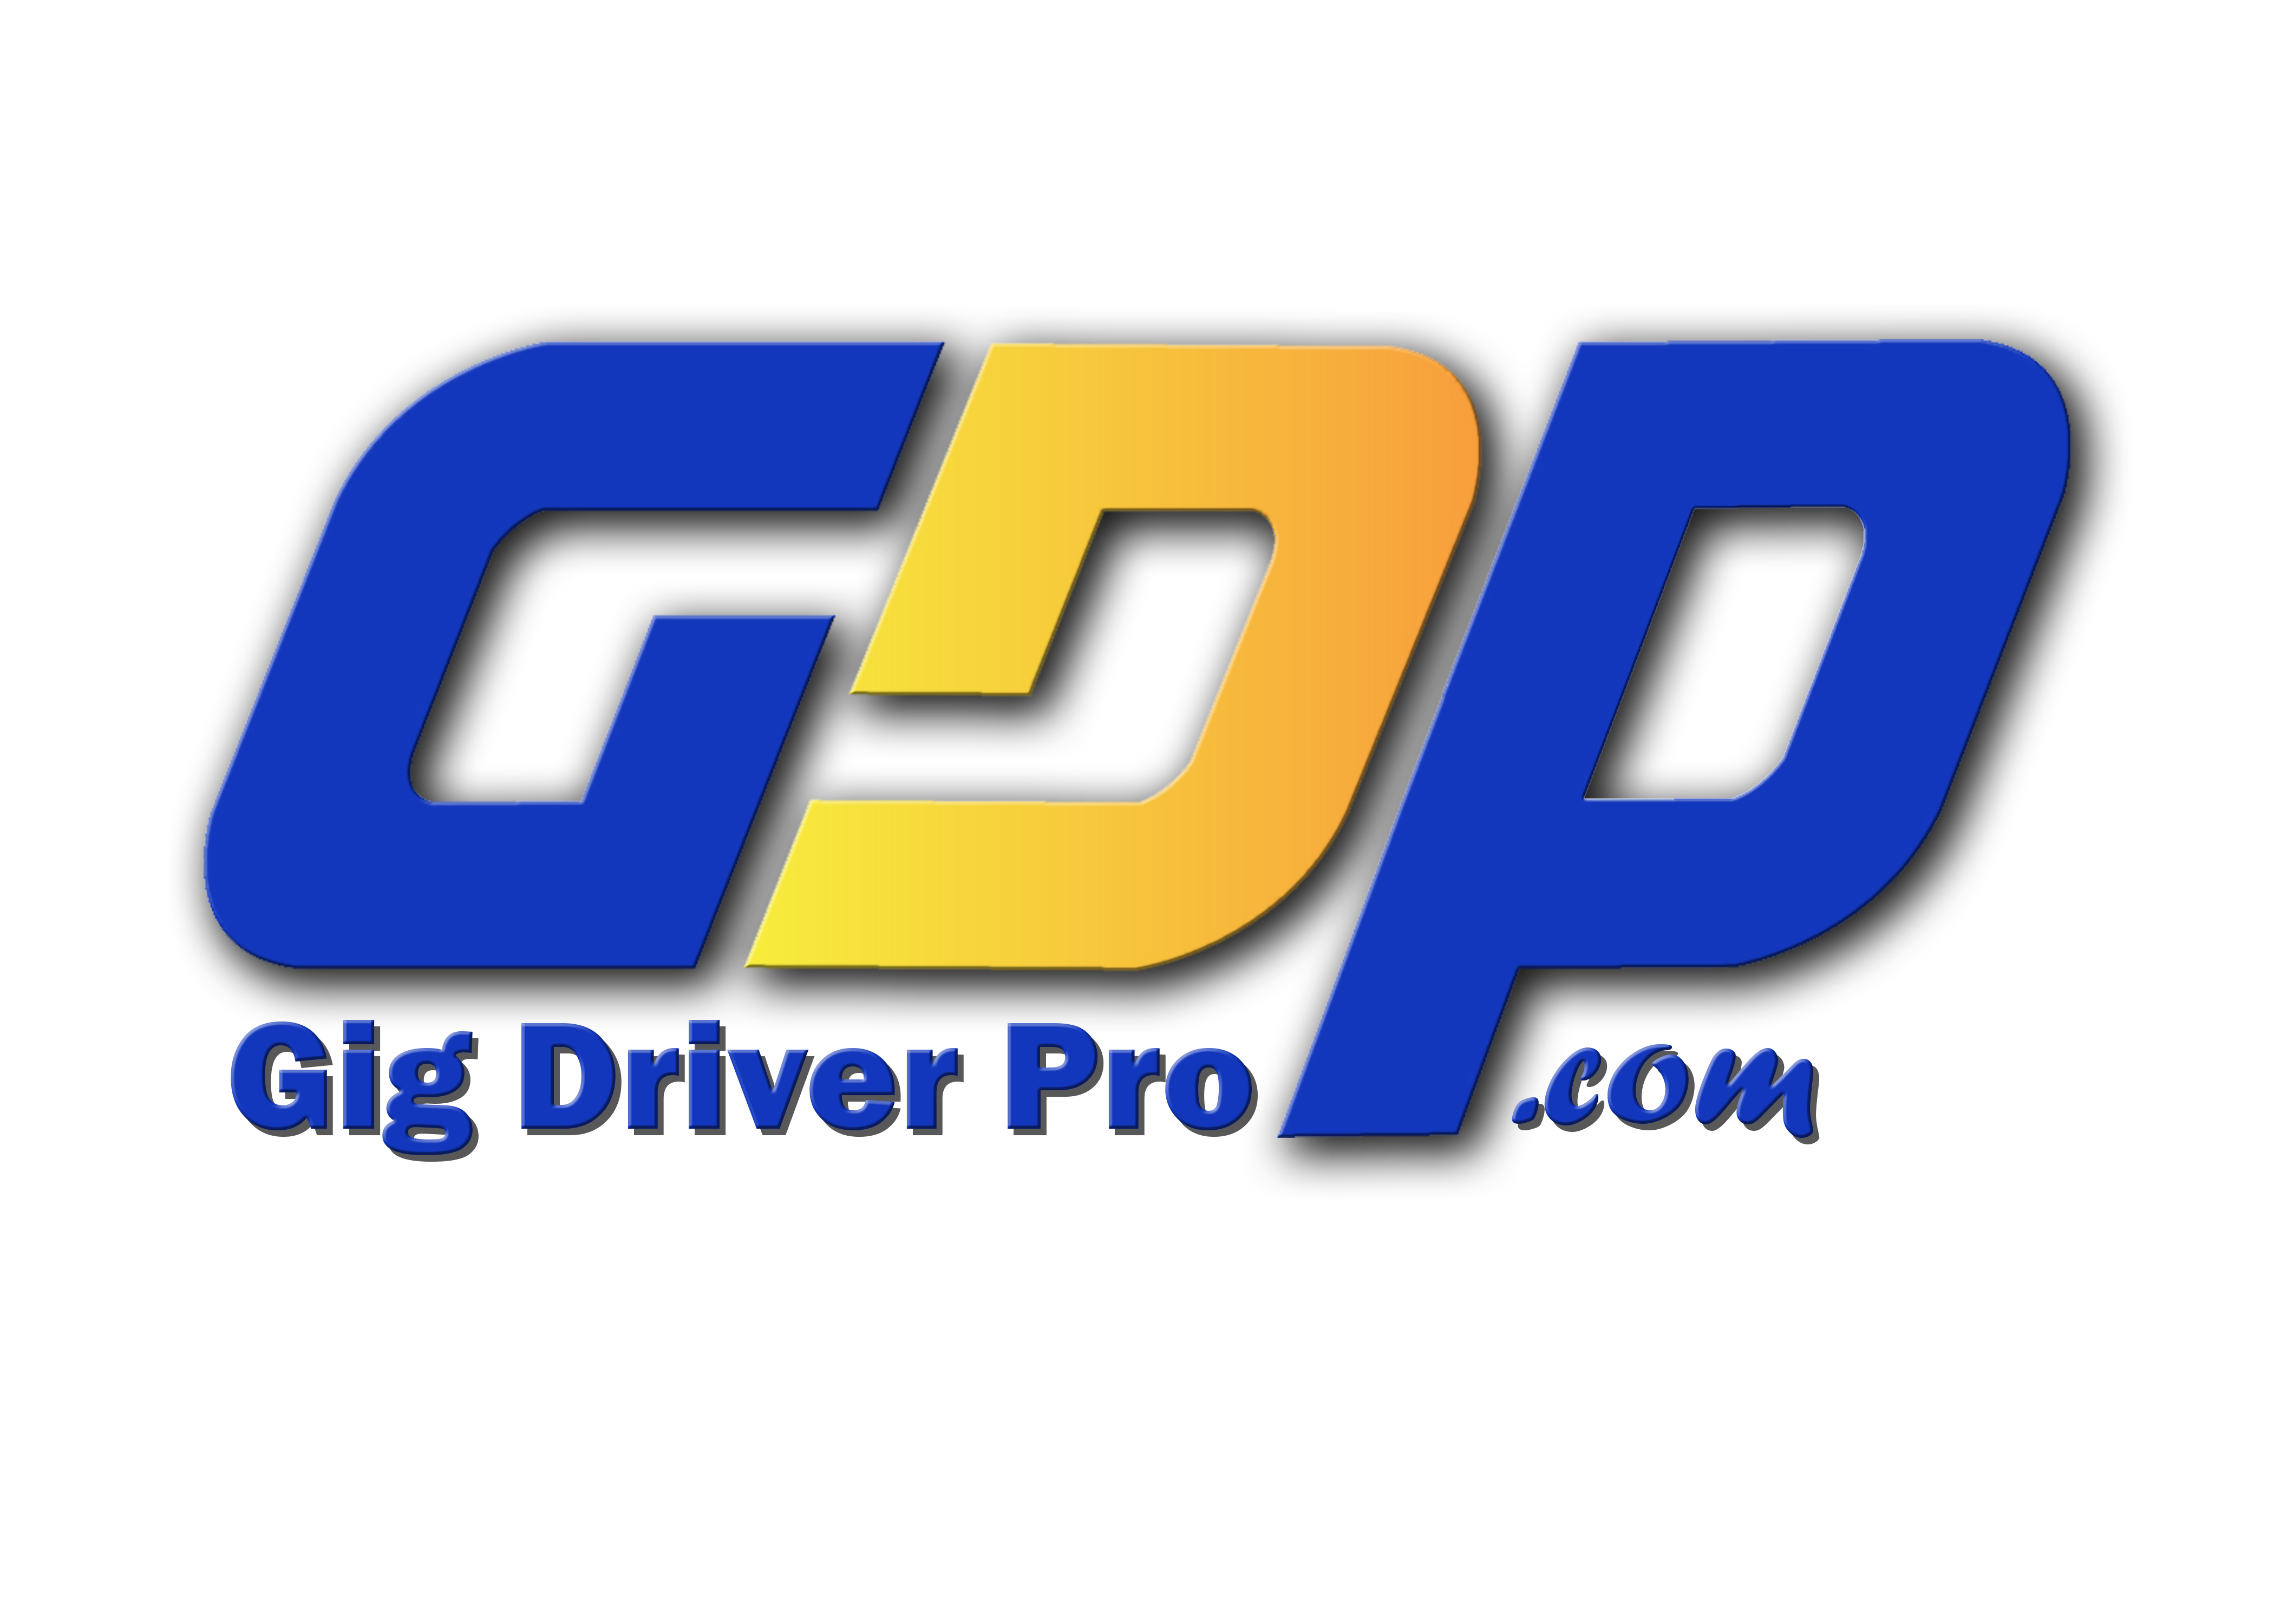 Gig Driver Pro